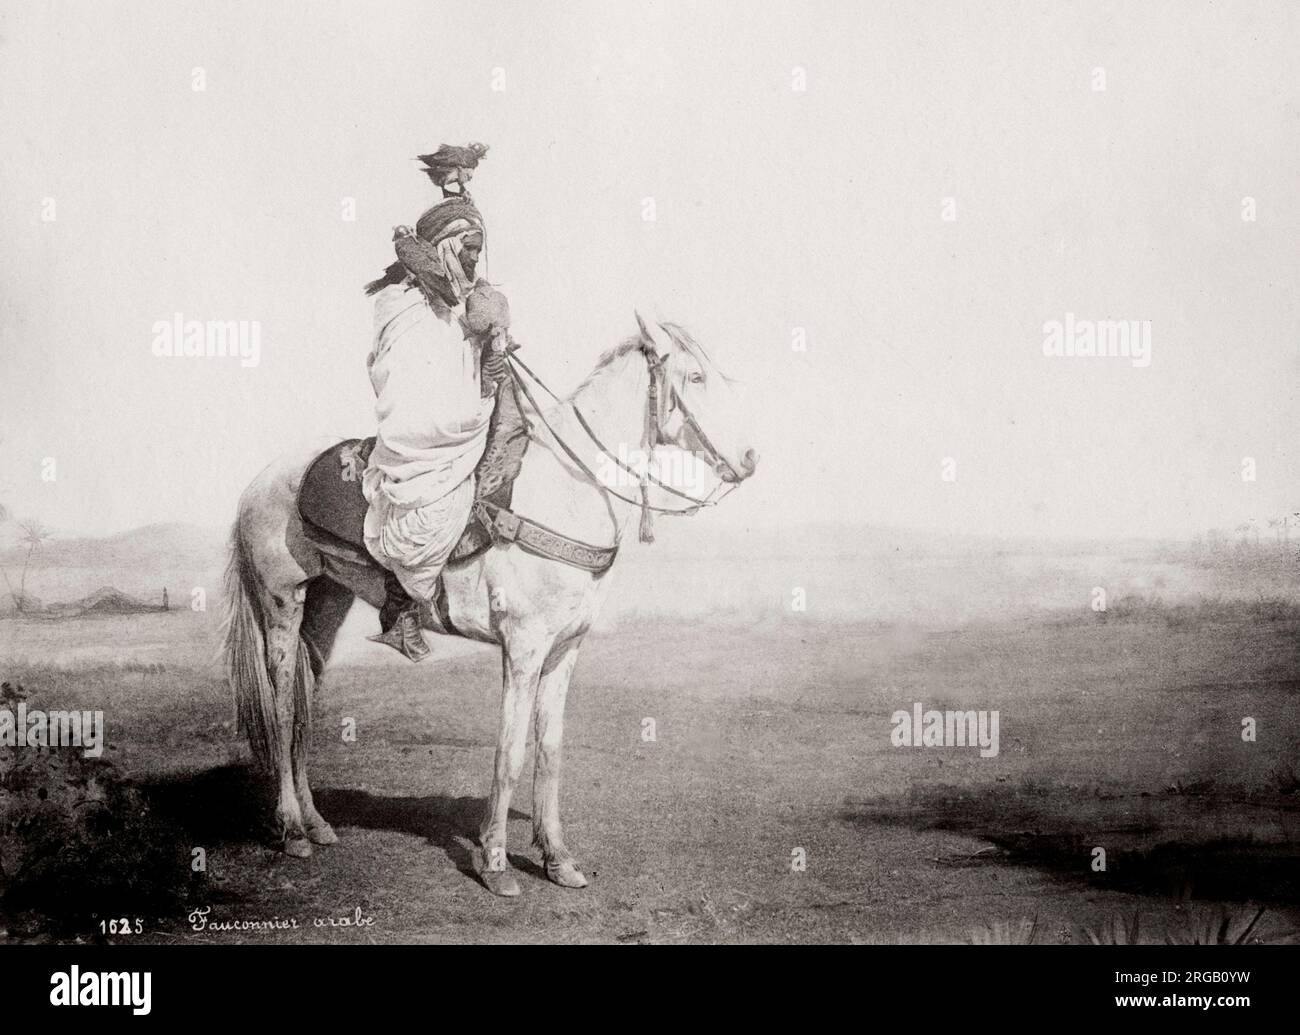 19th century vintage photograph: Arab man, falconer with falcon, mounted on a horse, Algeria. Stock Photo